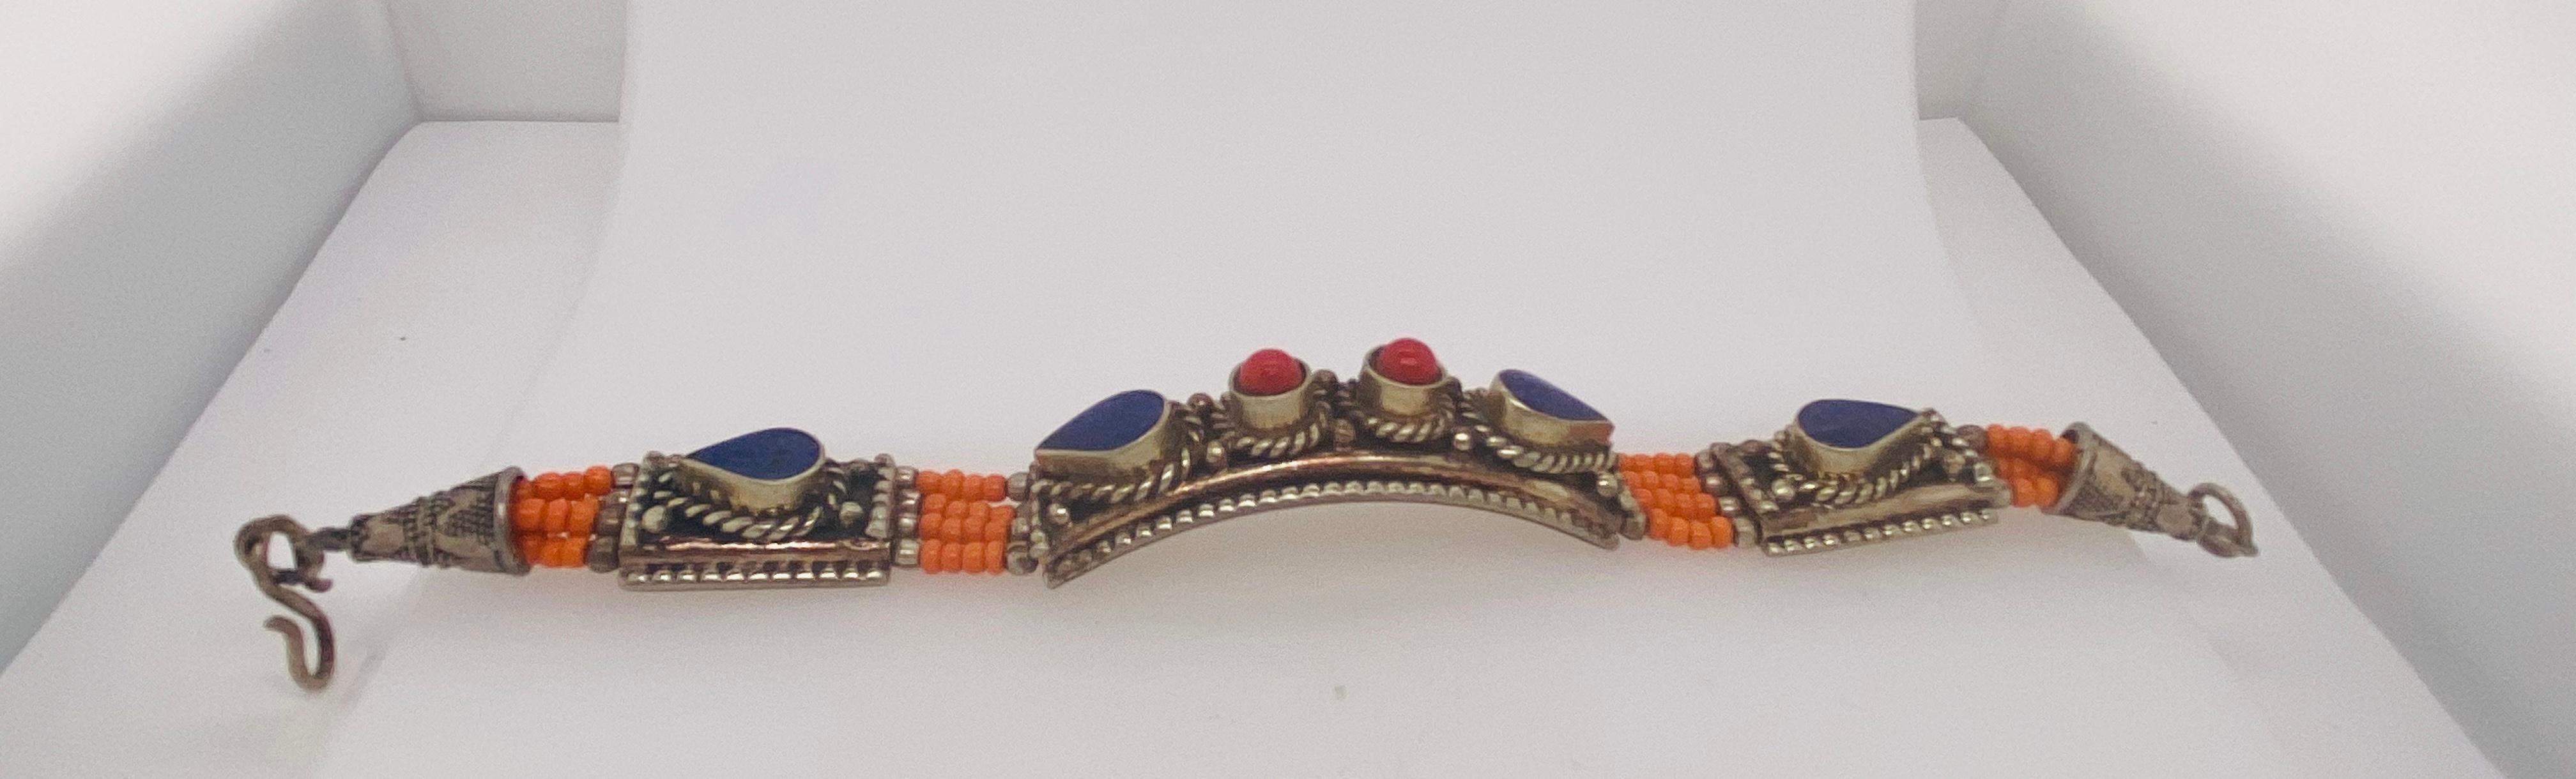 1950s Moroccan Tribal Silver & Blue, Red & Orange Stones Bracelet  For Sale 8